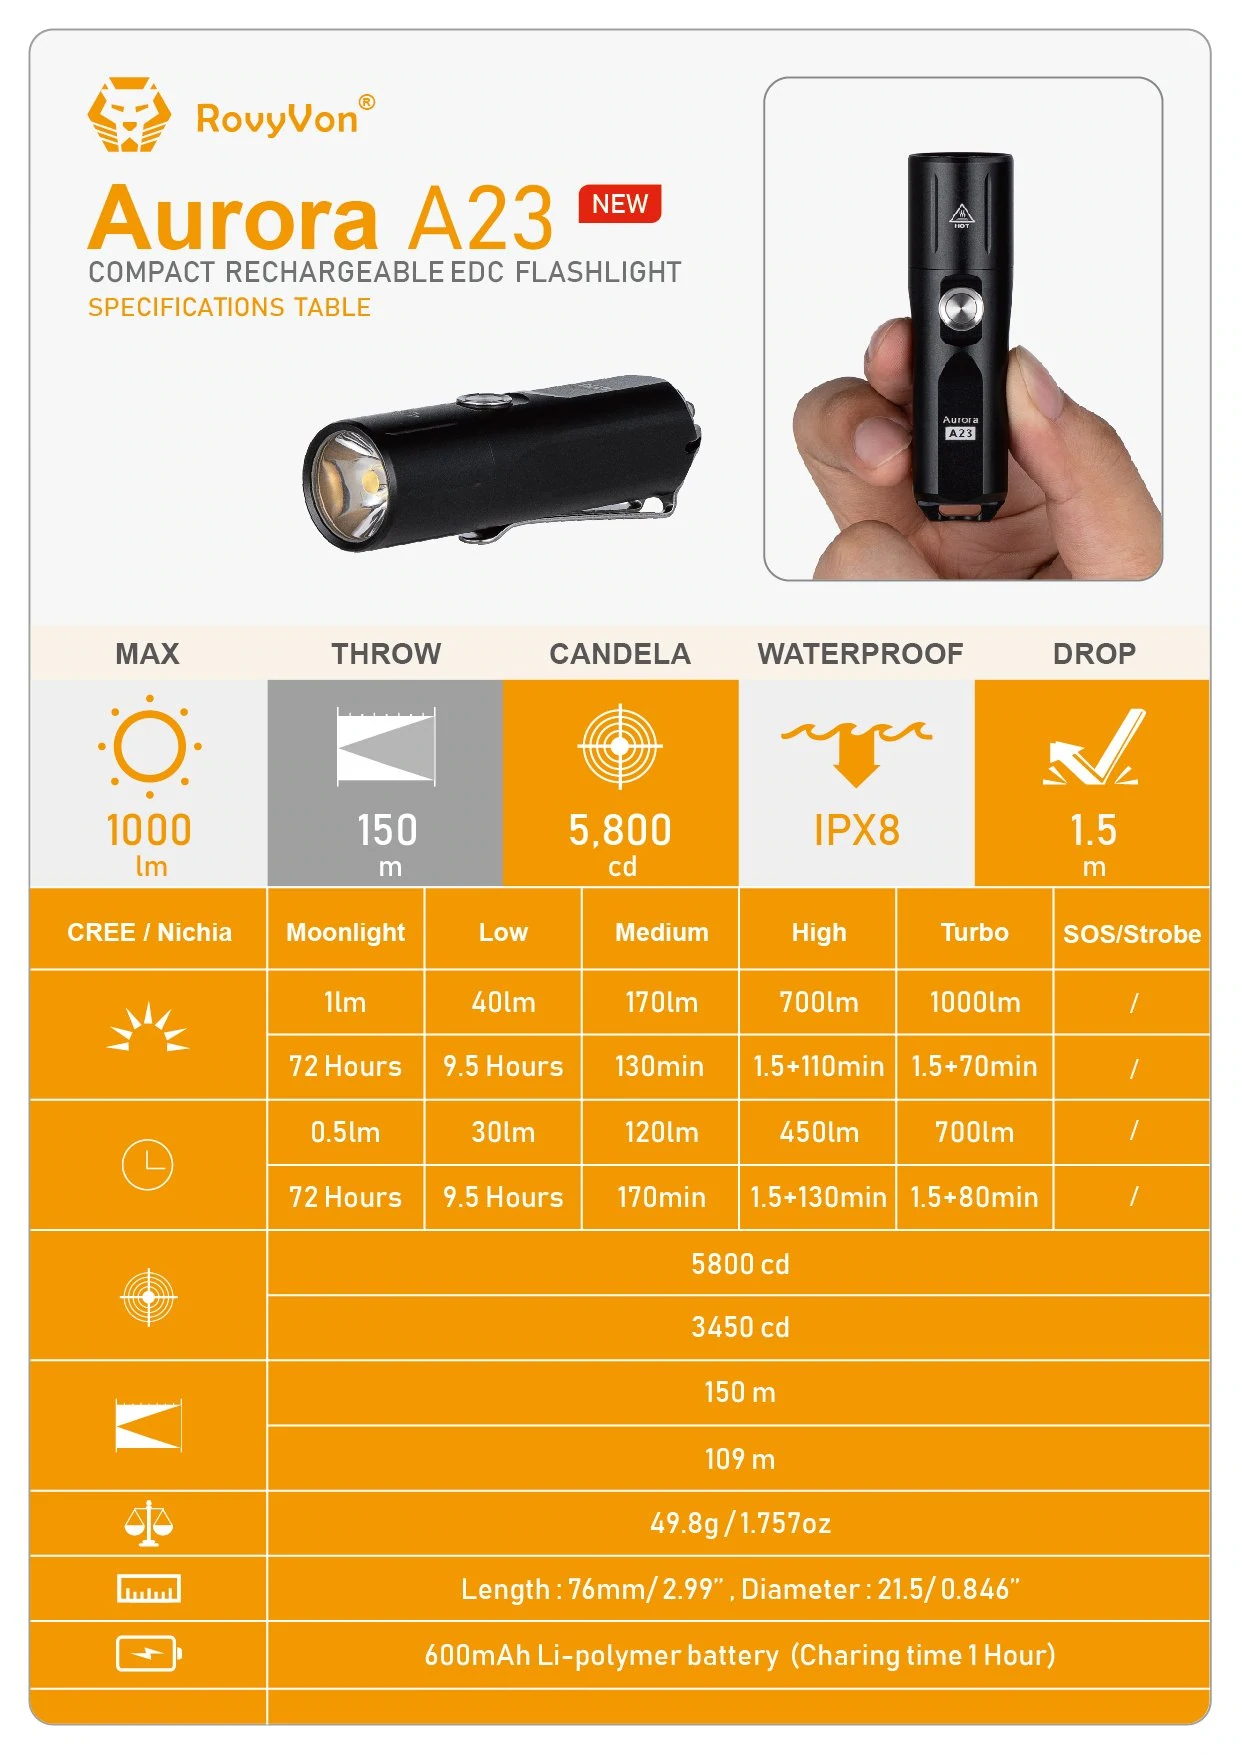 Rovyvon Aurora A23 Compact 1000 Lumens EDC Flashlight